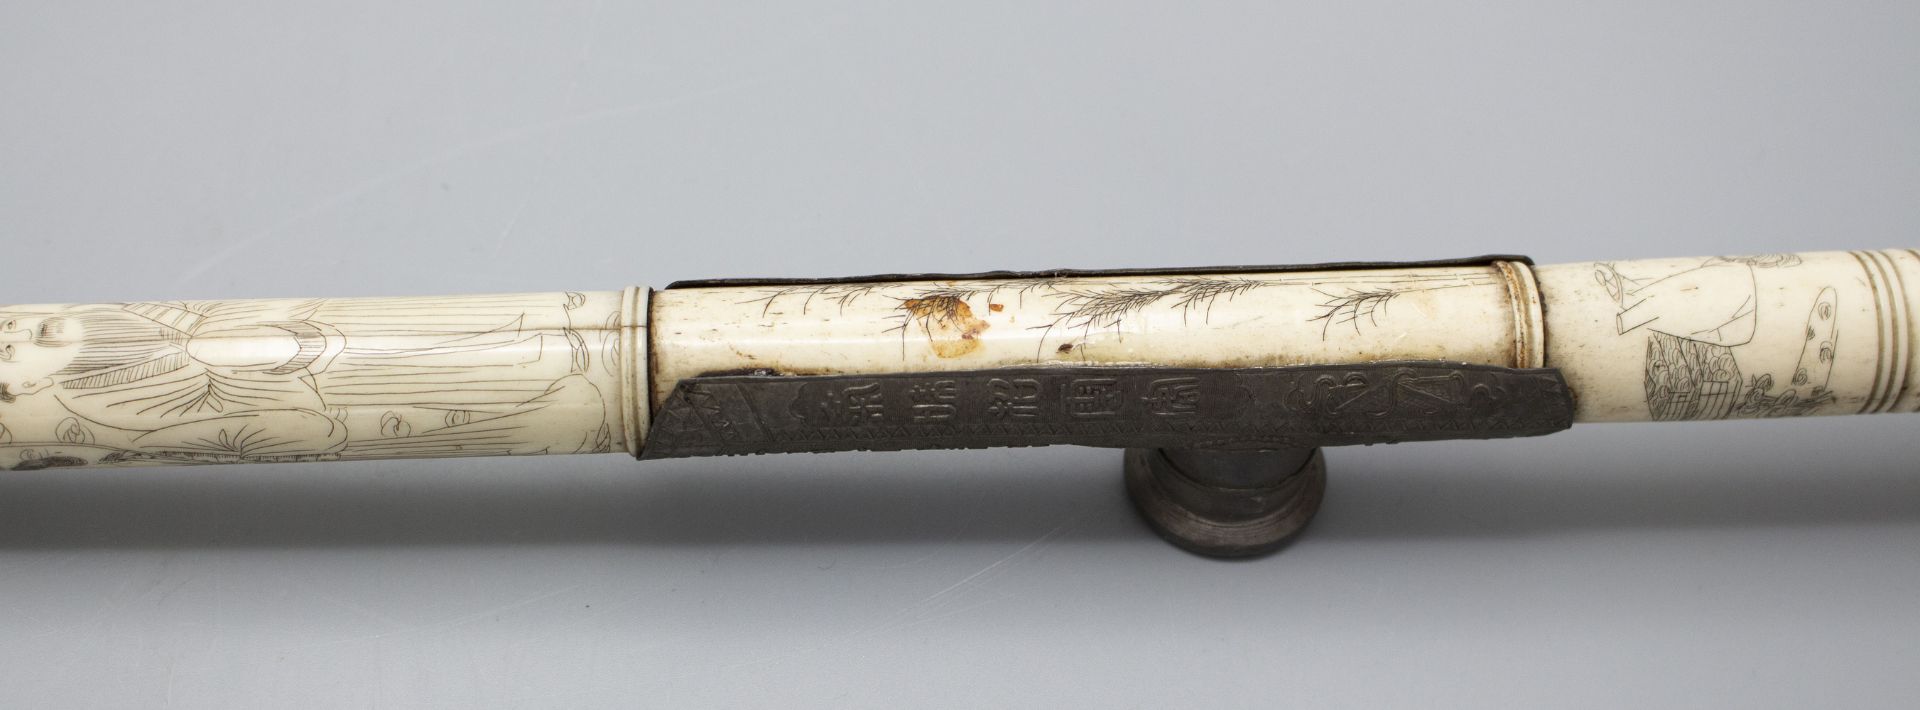 Opiumpfeife / An opium pipe, China, wohl 19. Jh. - Bild 4 aus 5